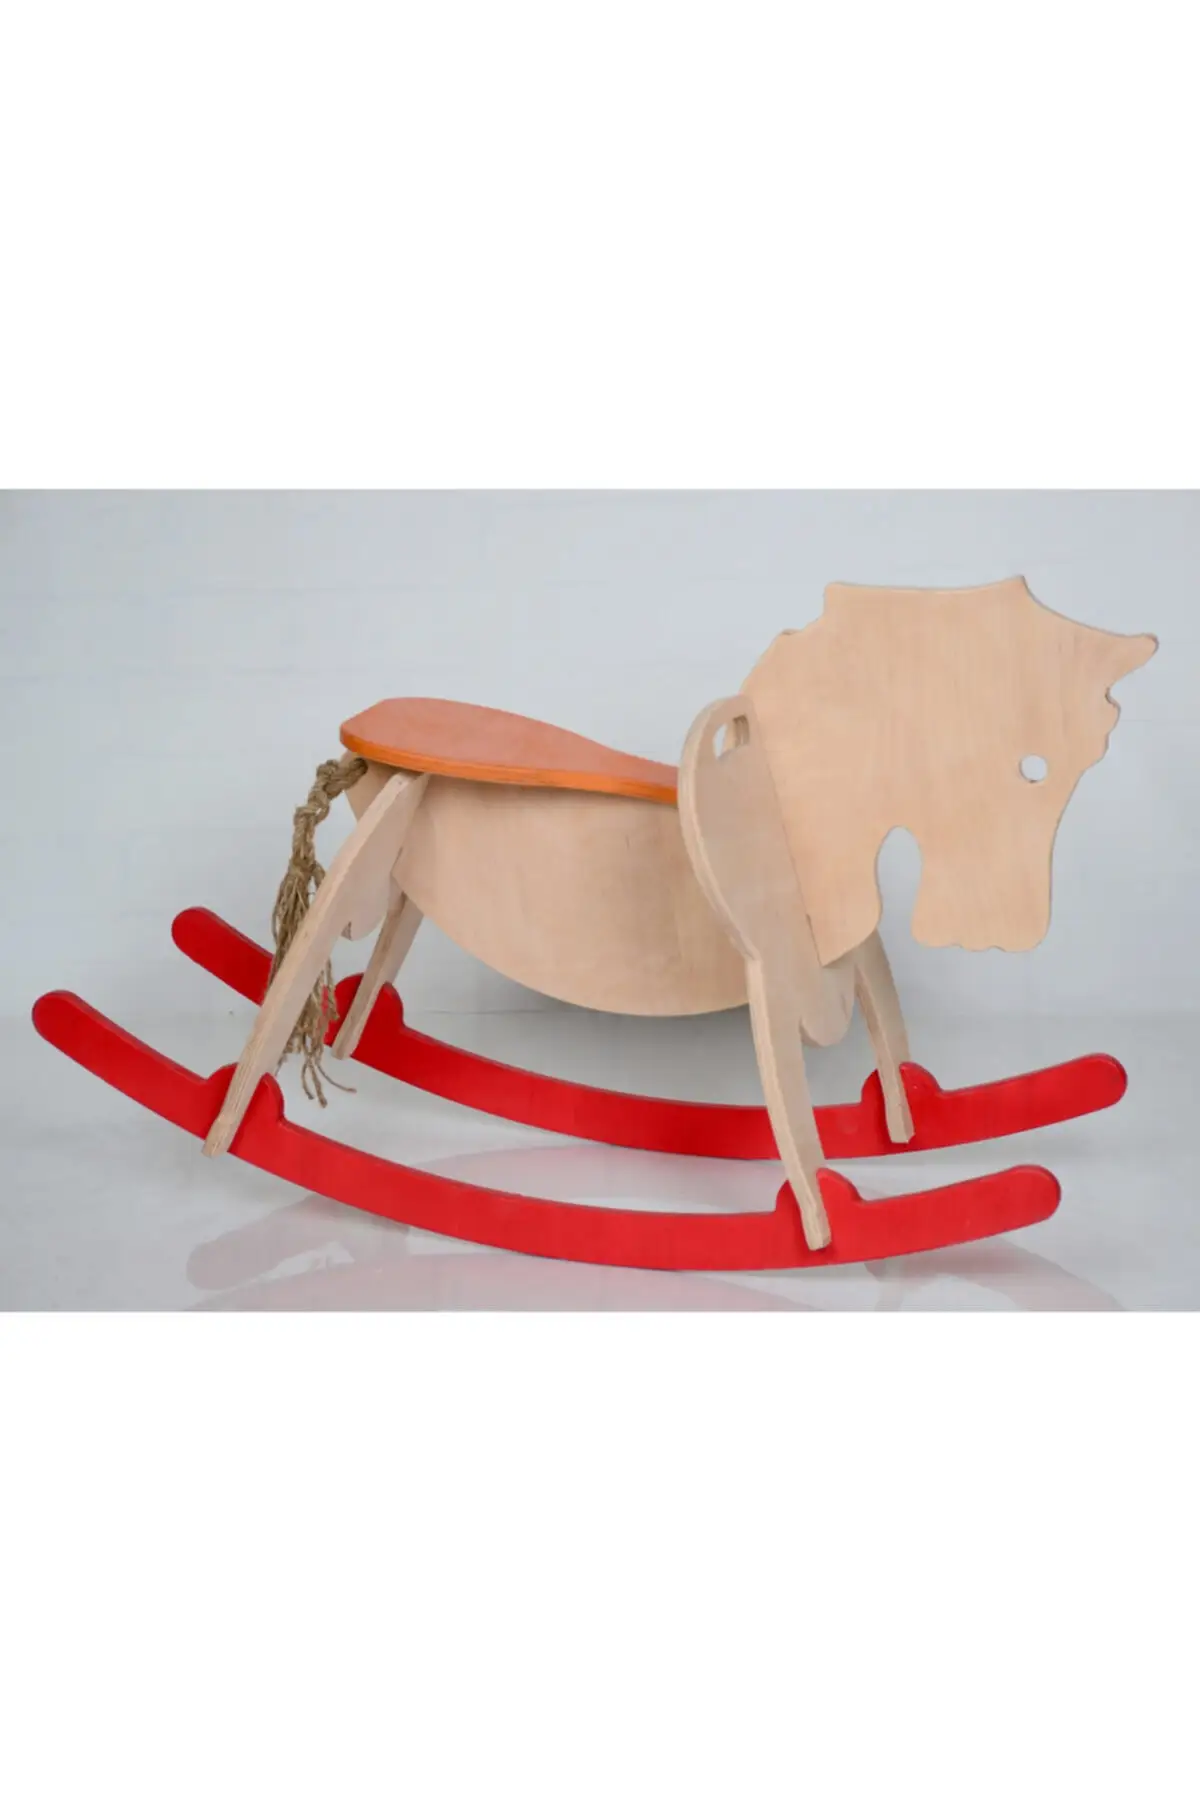 Vochtig monteren Malawi Houten Hobbelpaard Kan Straddle Paard Speelgoed Houten Paard - AliExpress